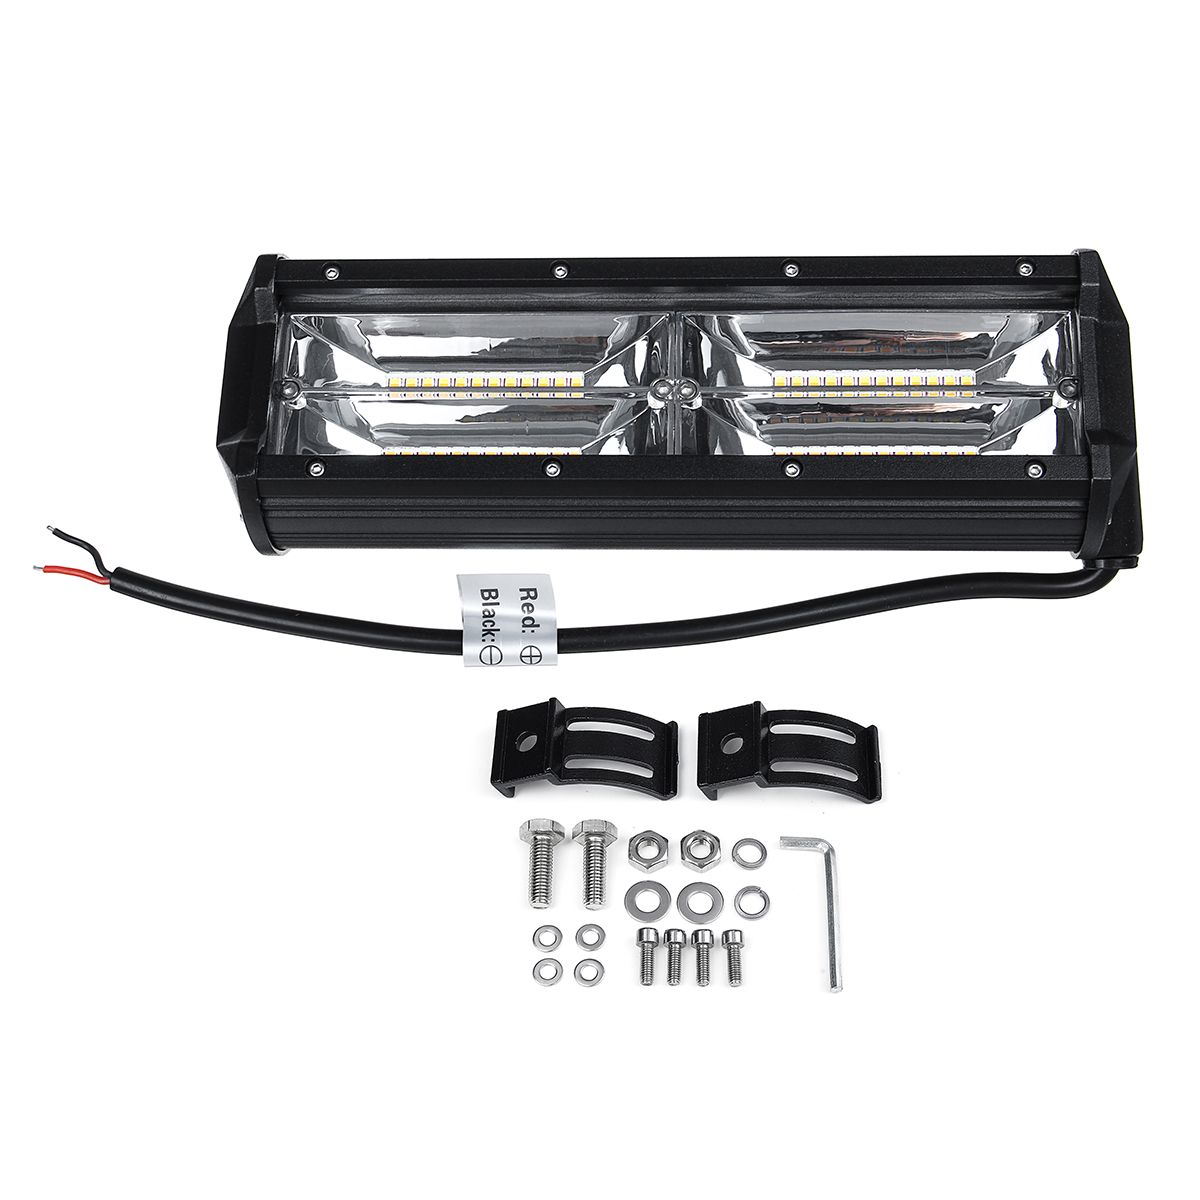 9Inch-144W-48LED-Work-Light-Bar-Strobe-Flash-Lamp-White--Amber-Color-For-Offroad-Trailer-SUV-ATV-1676368